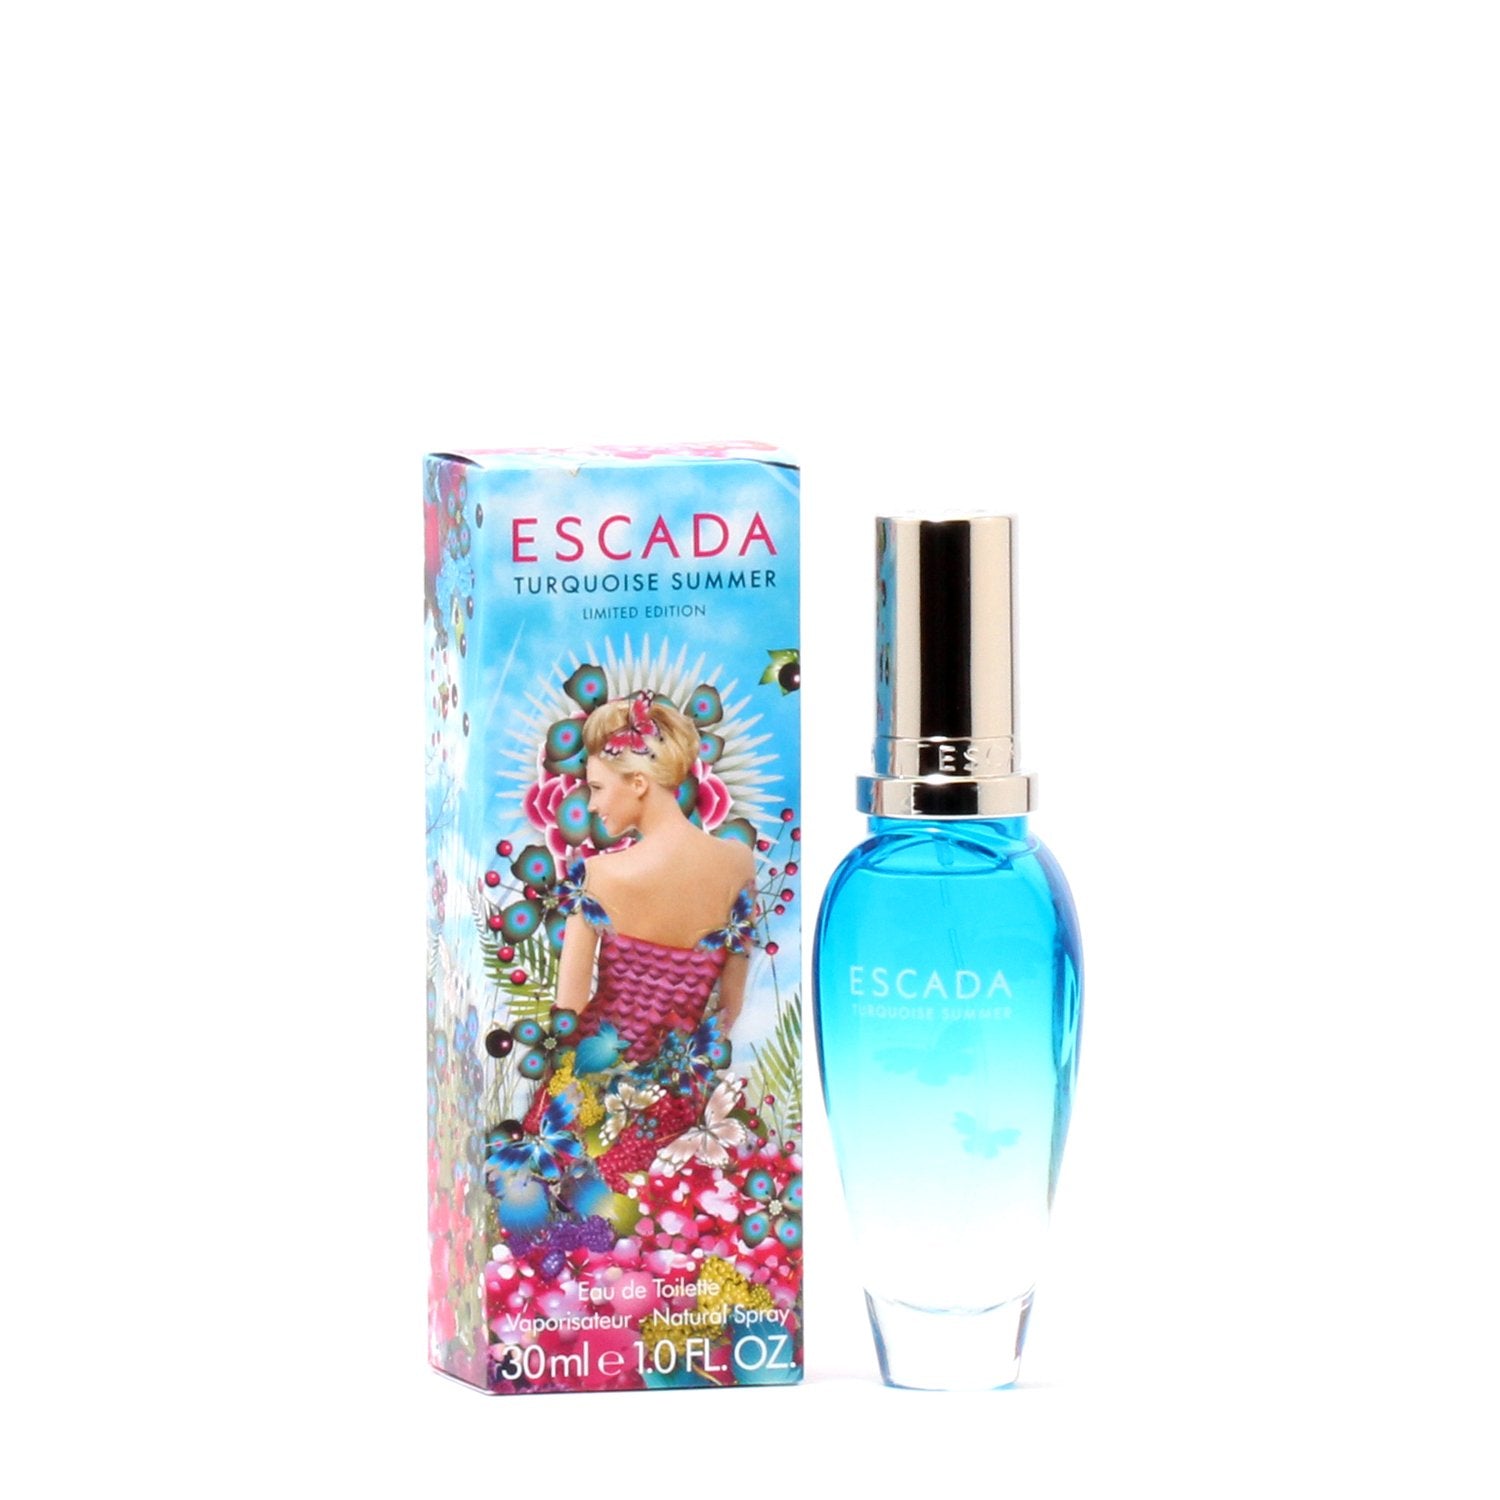 Perfume - ESCADA TURQUOISE SUMMER FOR WOMEN - EAU DE TOILETTE SPRAY, 1.0 OZ